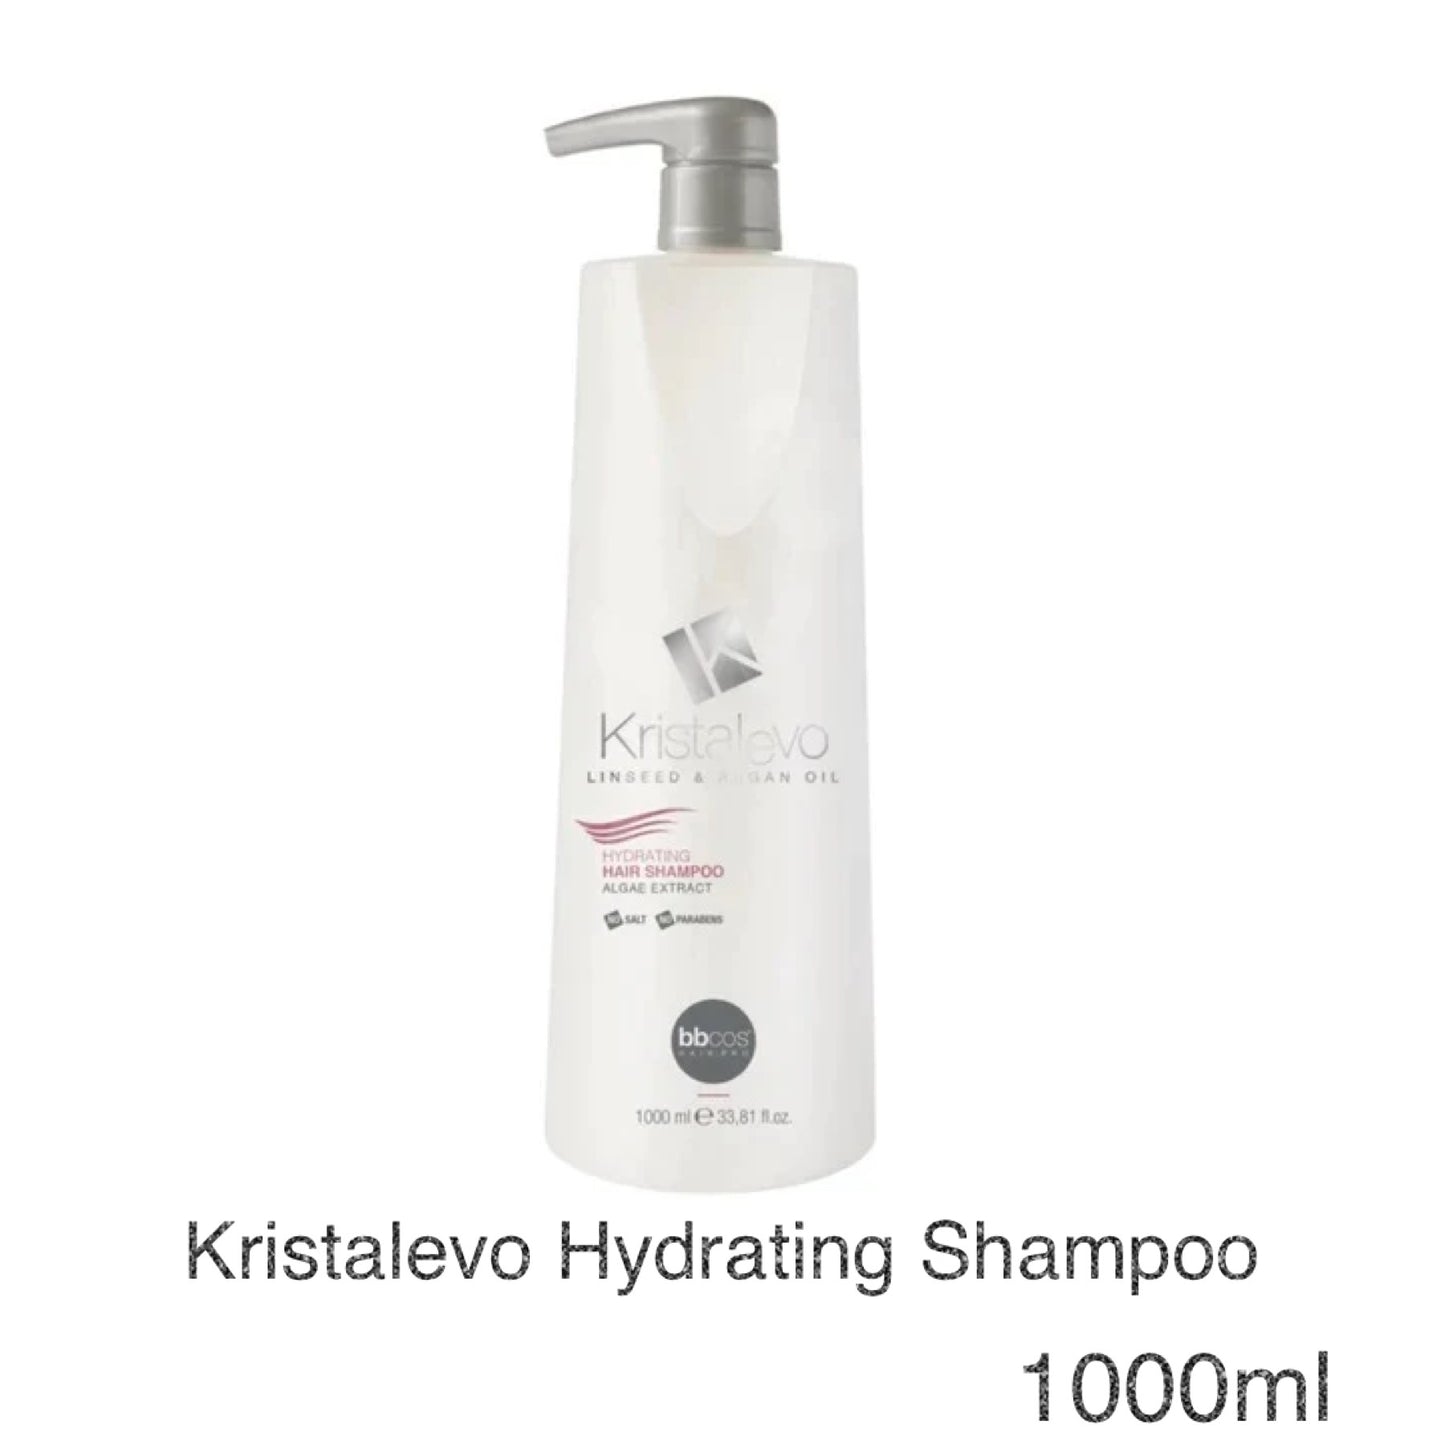 MHP- Italian Kristalevo Hydrating Shampoo (Dry Hair)